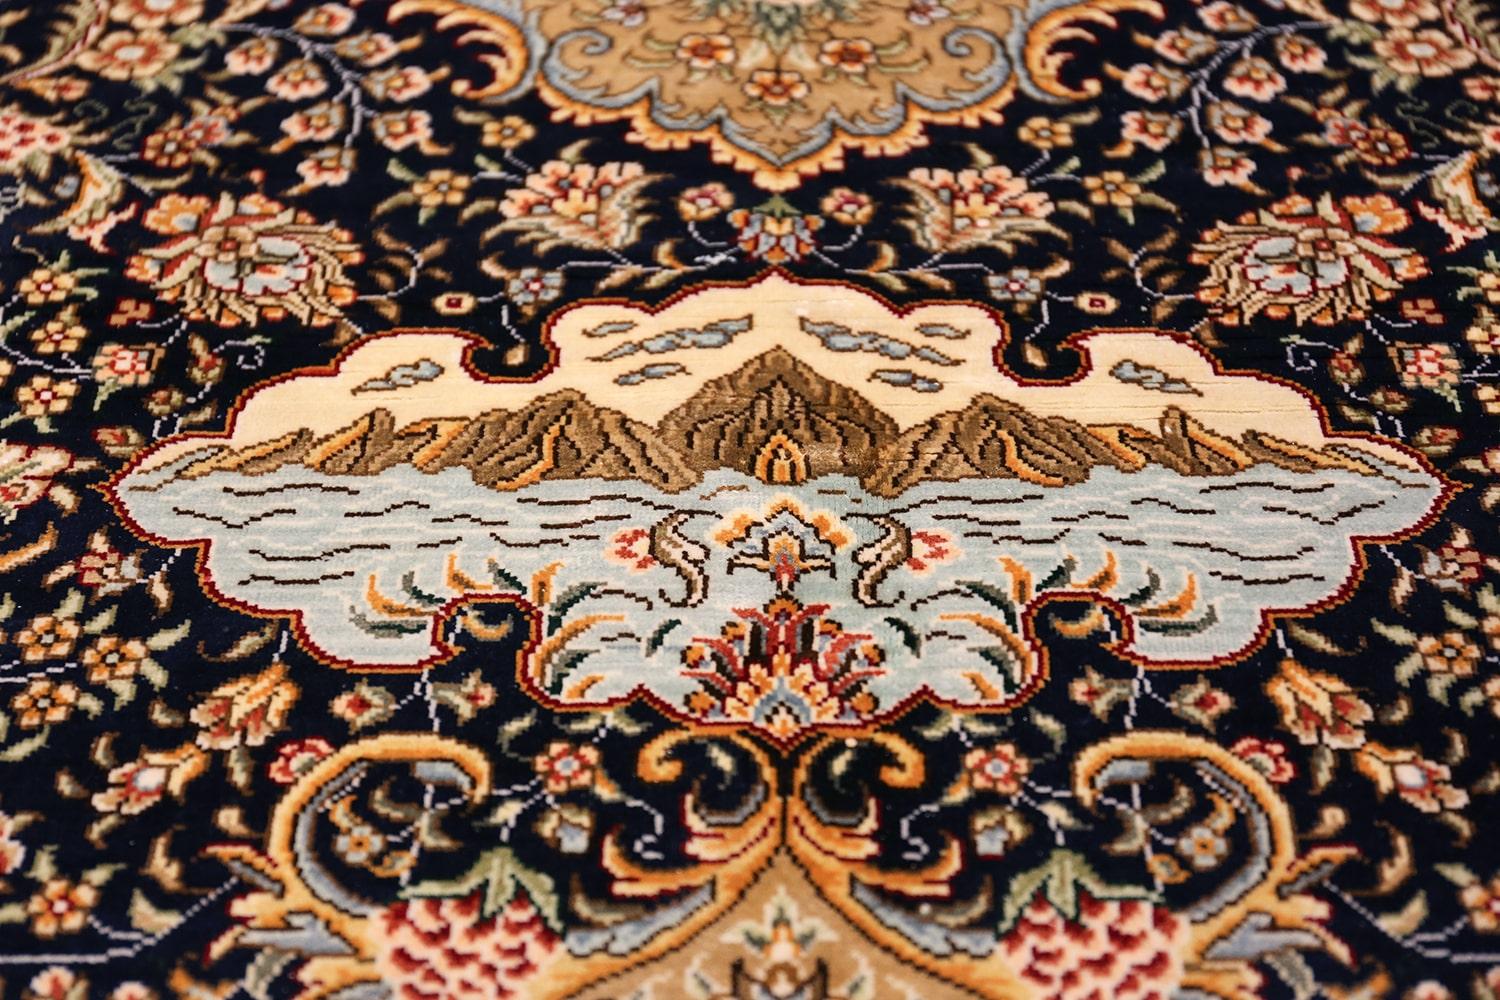 Breathtaking animal motif silk modern Chinese rug, country of origin / rug type: China, circa date: Modern rug. Size: 9 ft x 11 ft 9 in (2.74 m x 3.58 m)